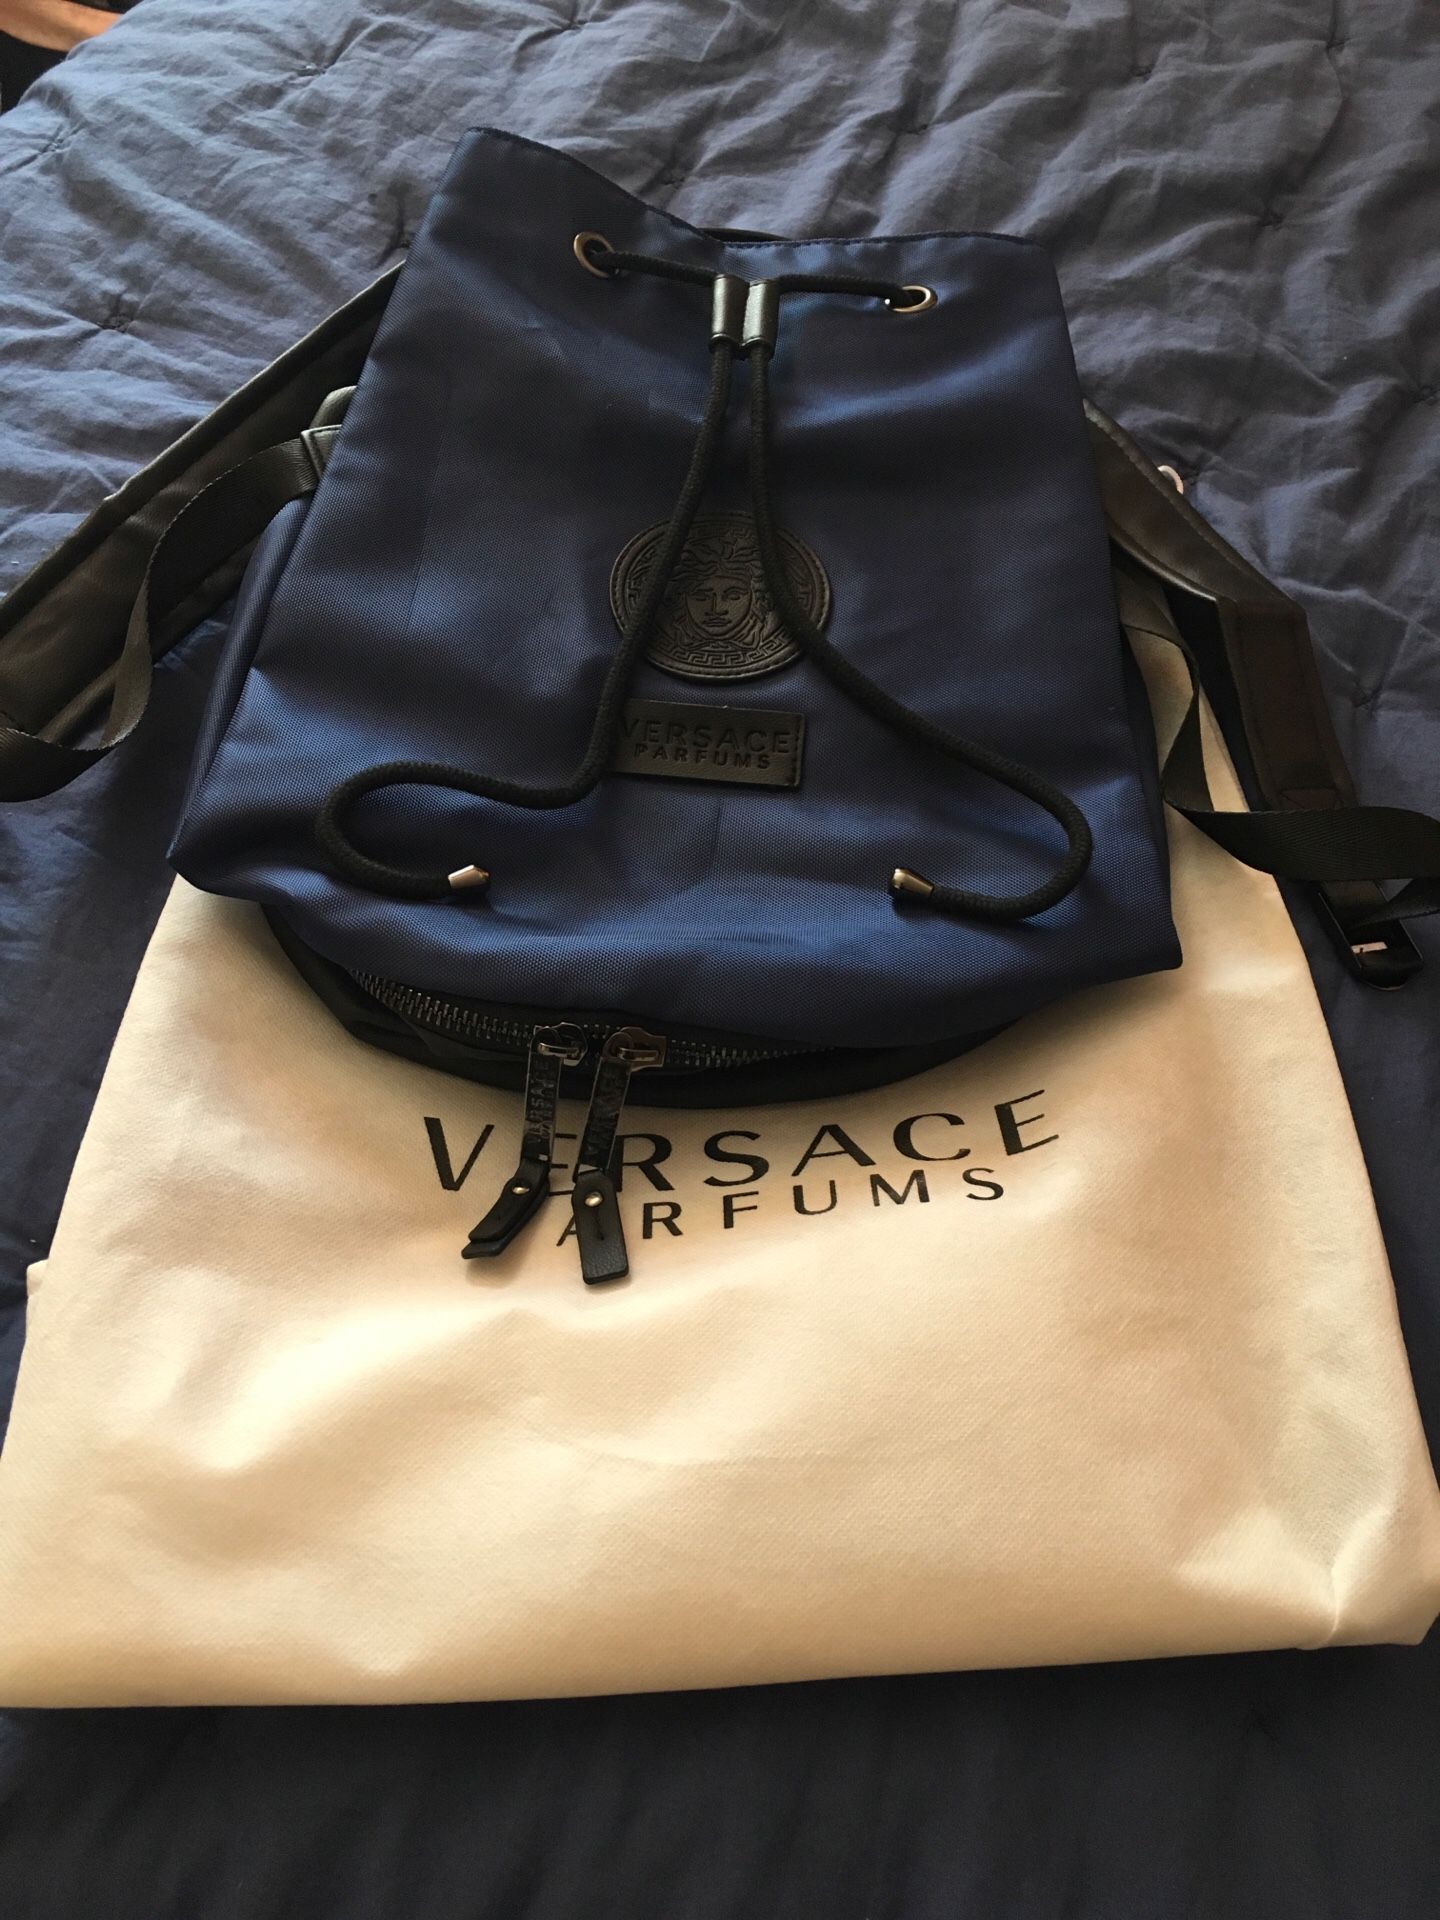 Versace backpack/duffle bag NEW